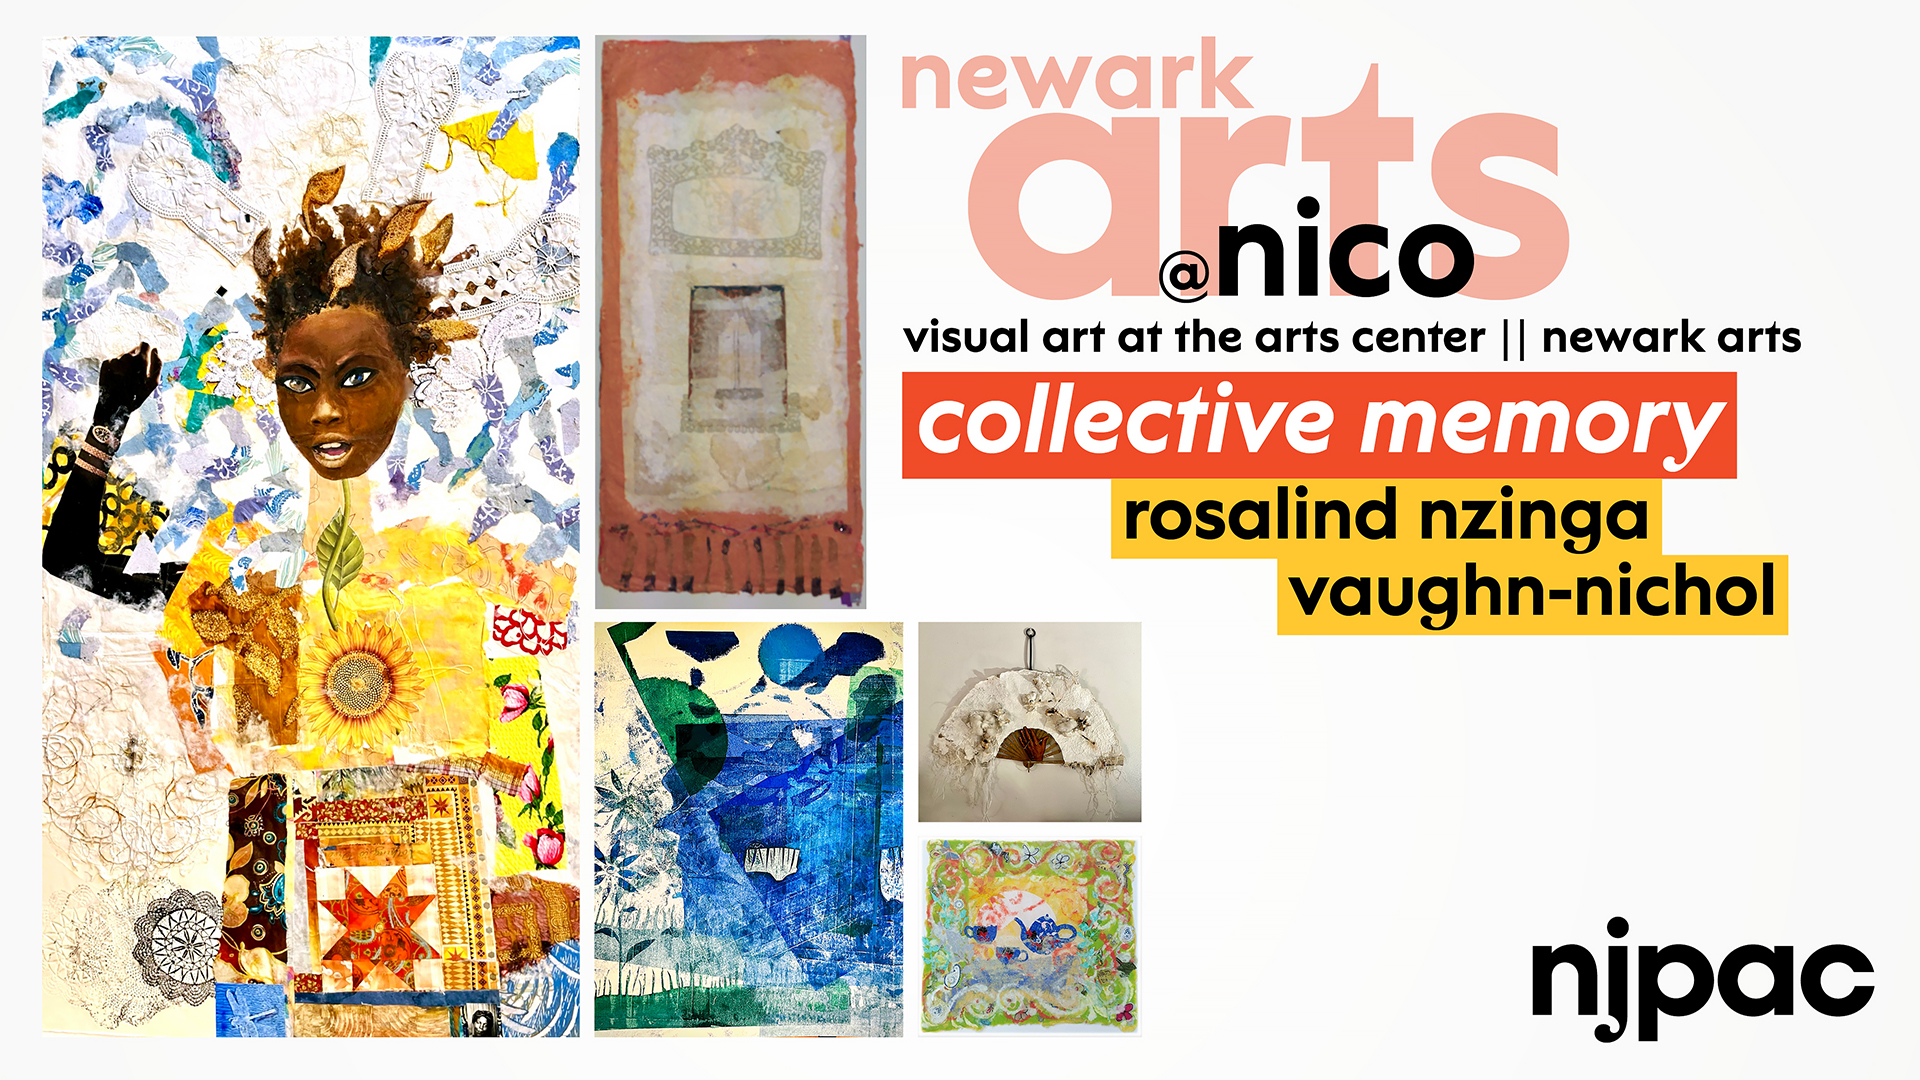 Newark Arts @ nico, visual art at the art center | Collective Memory by Rosalind Nzinga